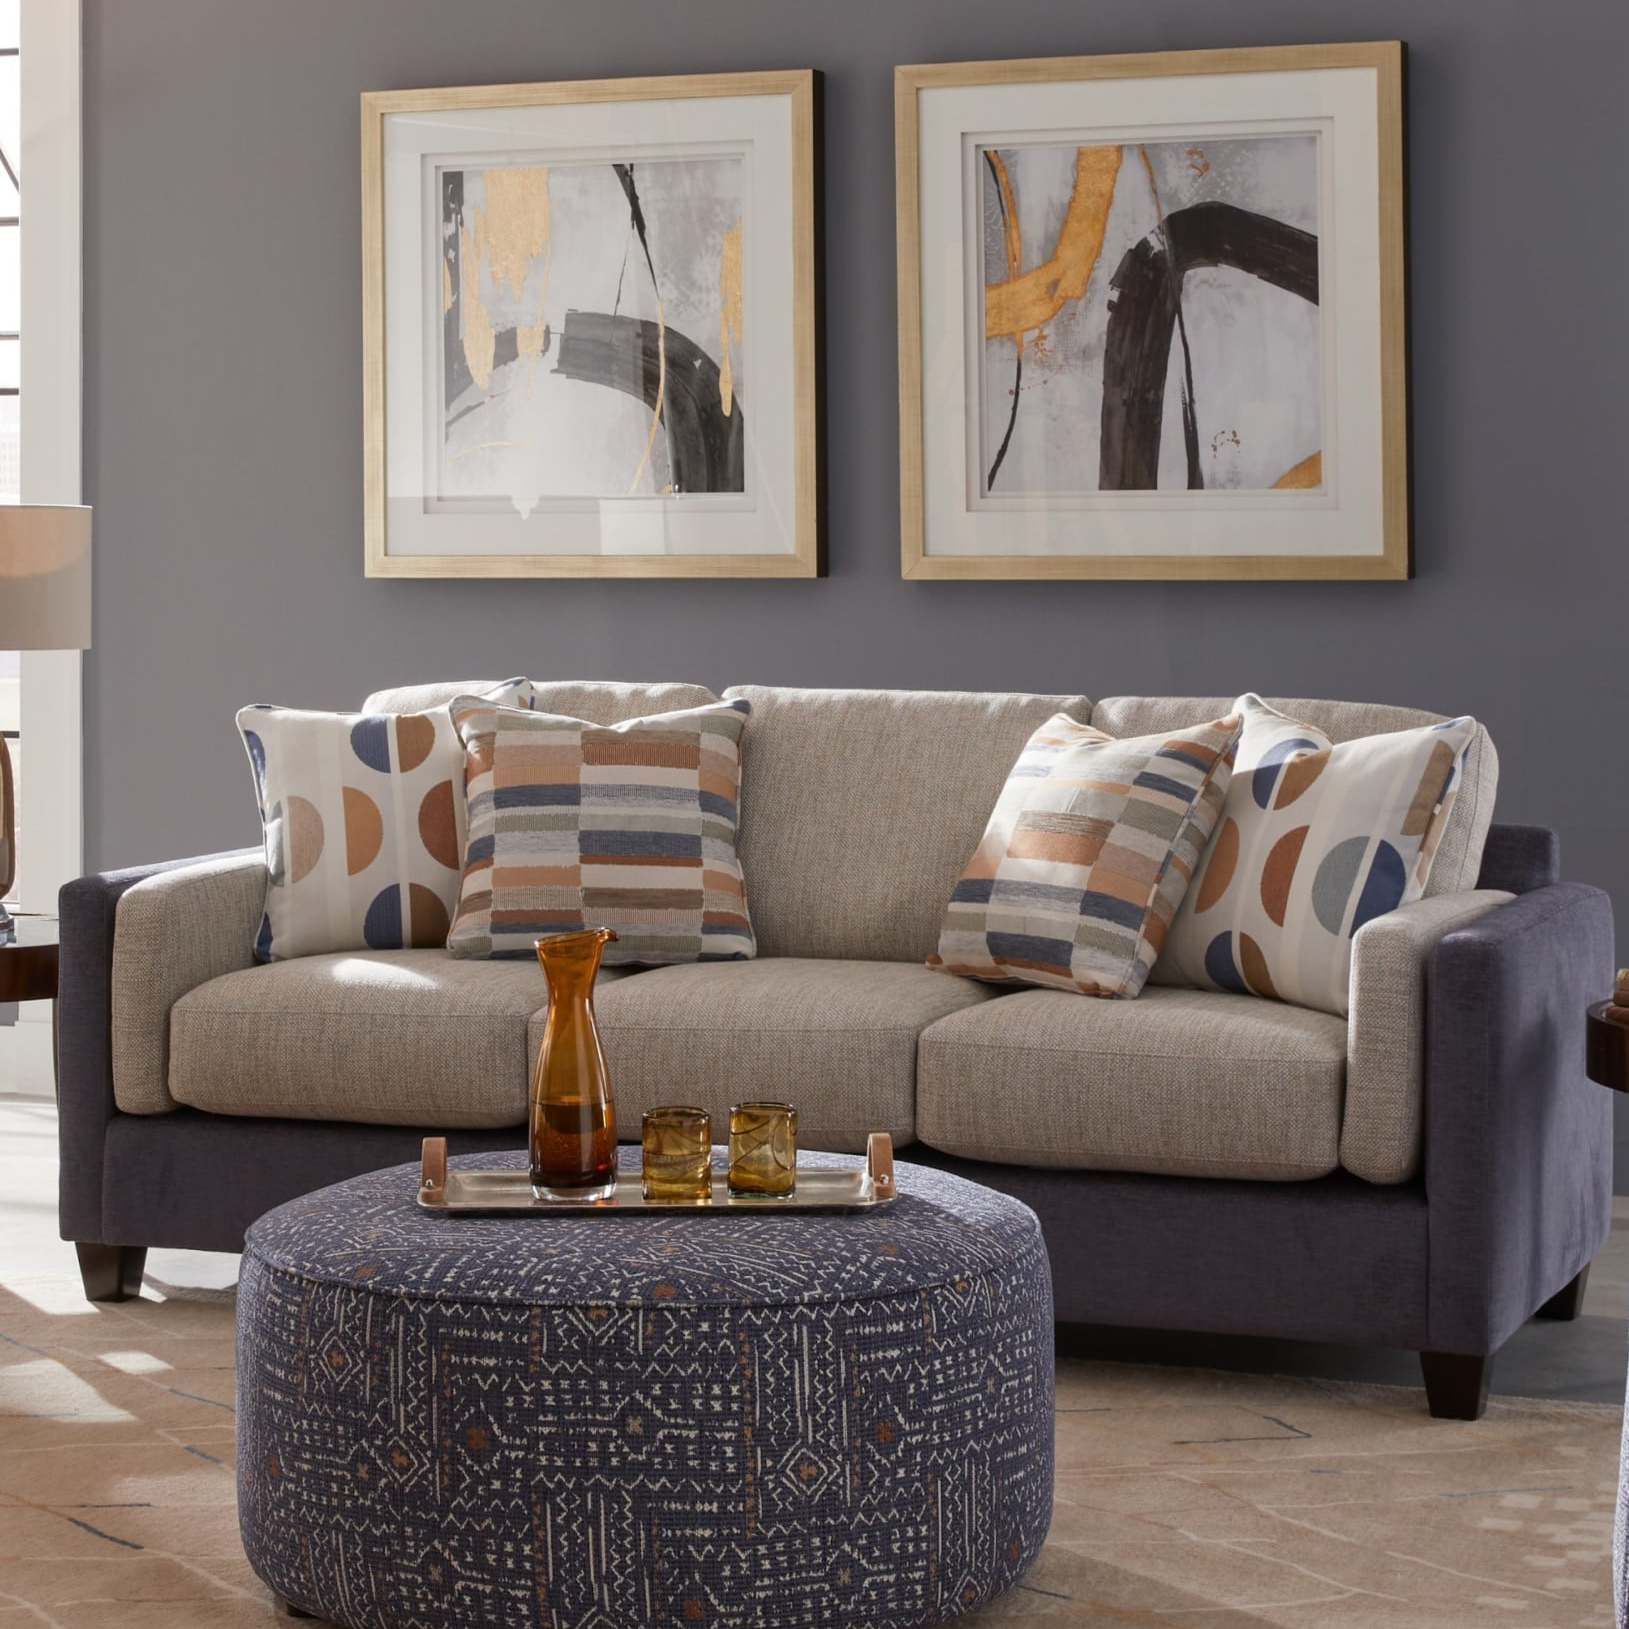 Custom Ikea Nockeby Loveseat Sofa Covers in Kino Denim fabric -  Contemporary - Living Room - Melbourne - by Comfort Works Custom Slipcovers  | Houzz UK